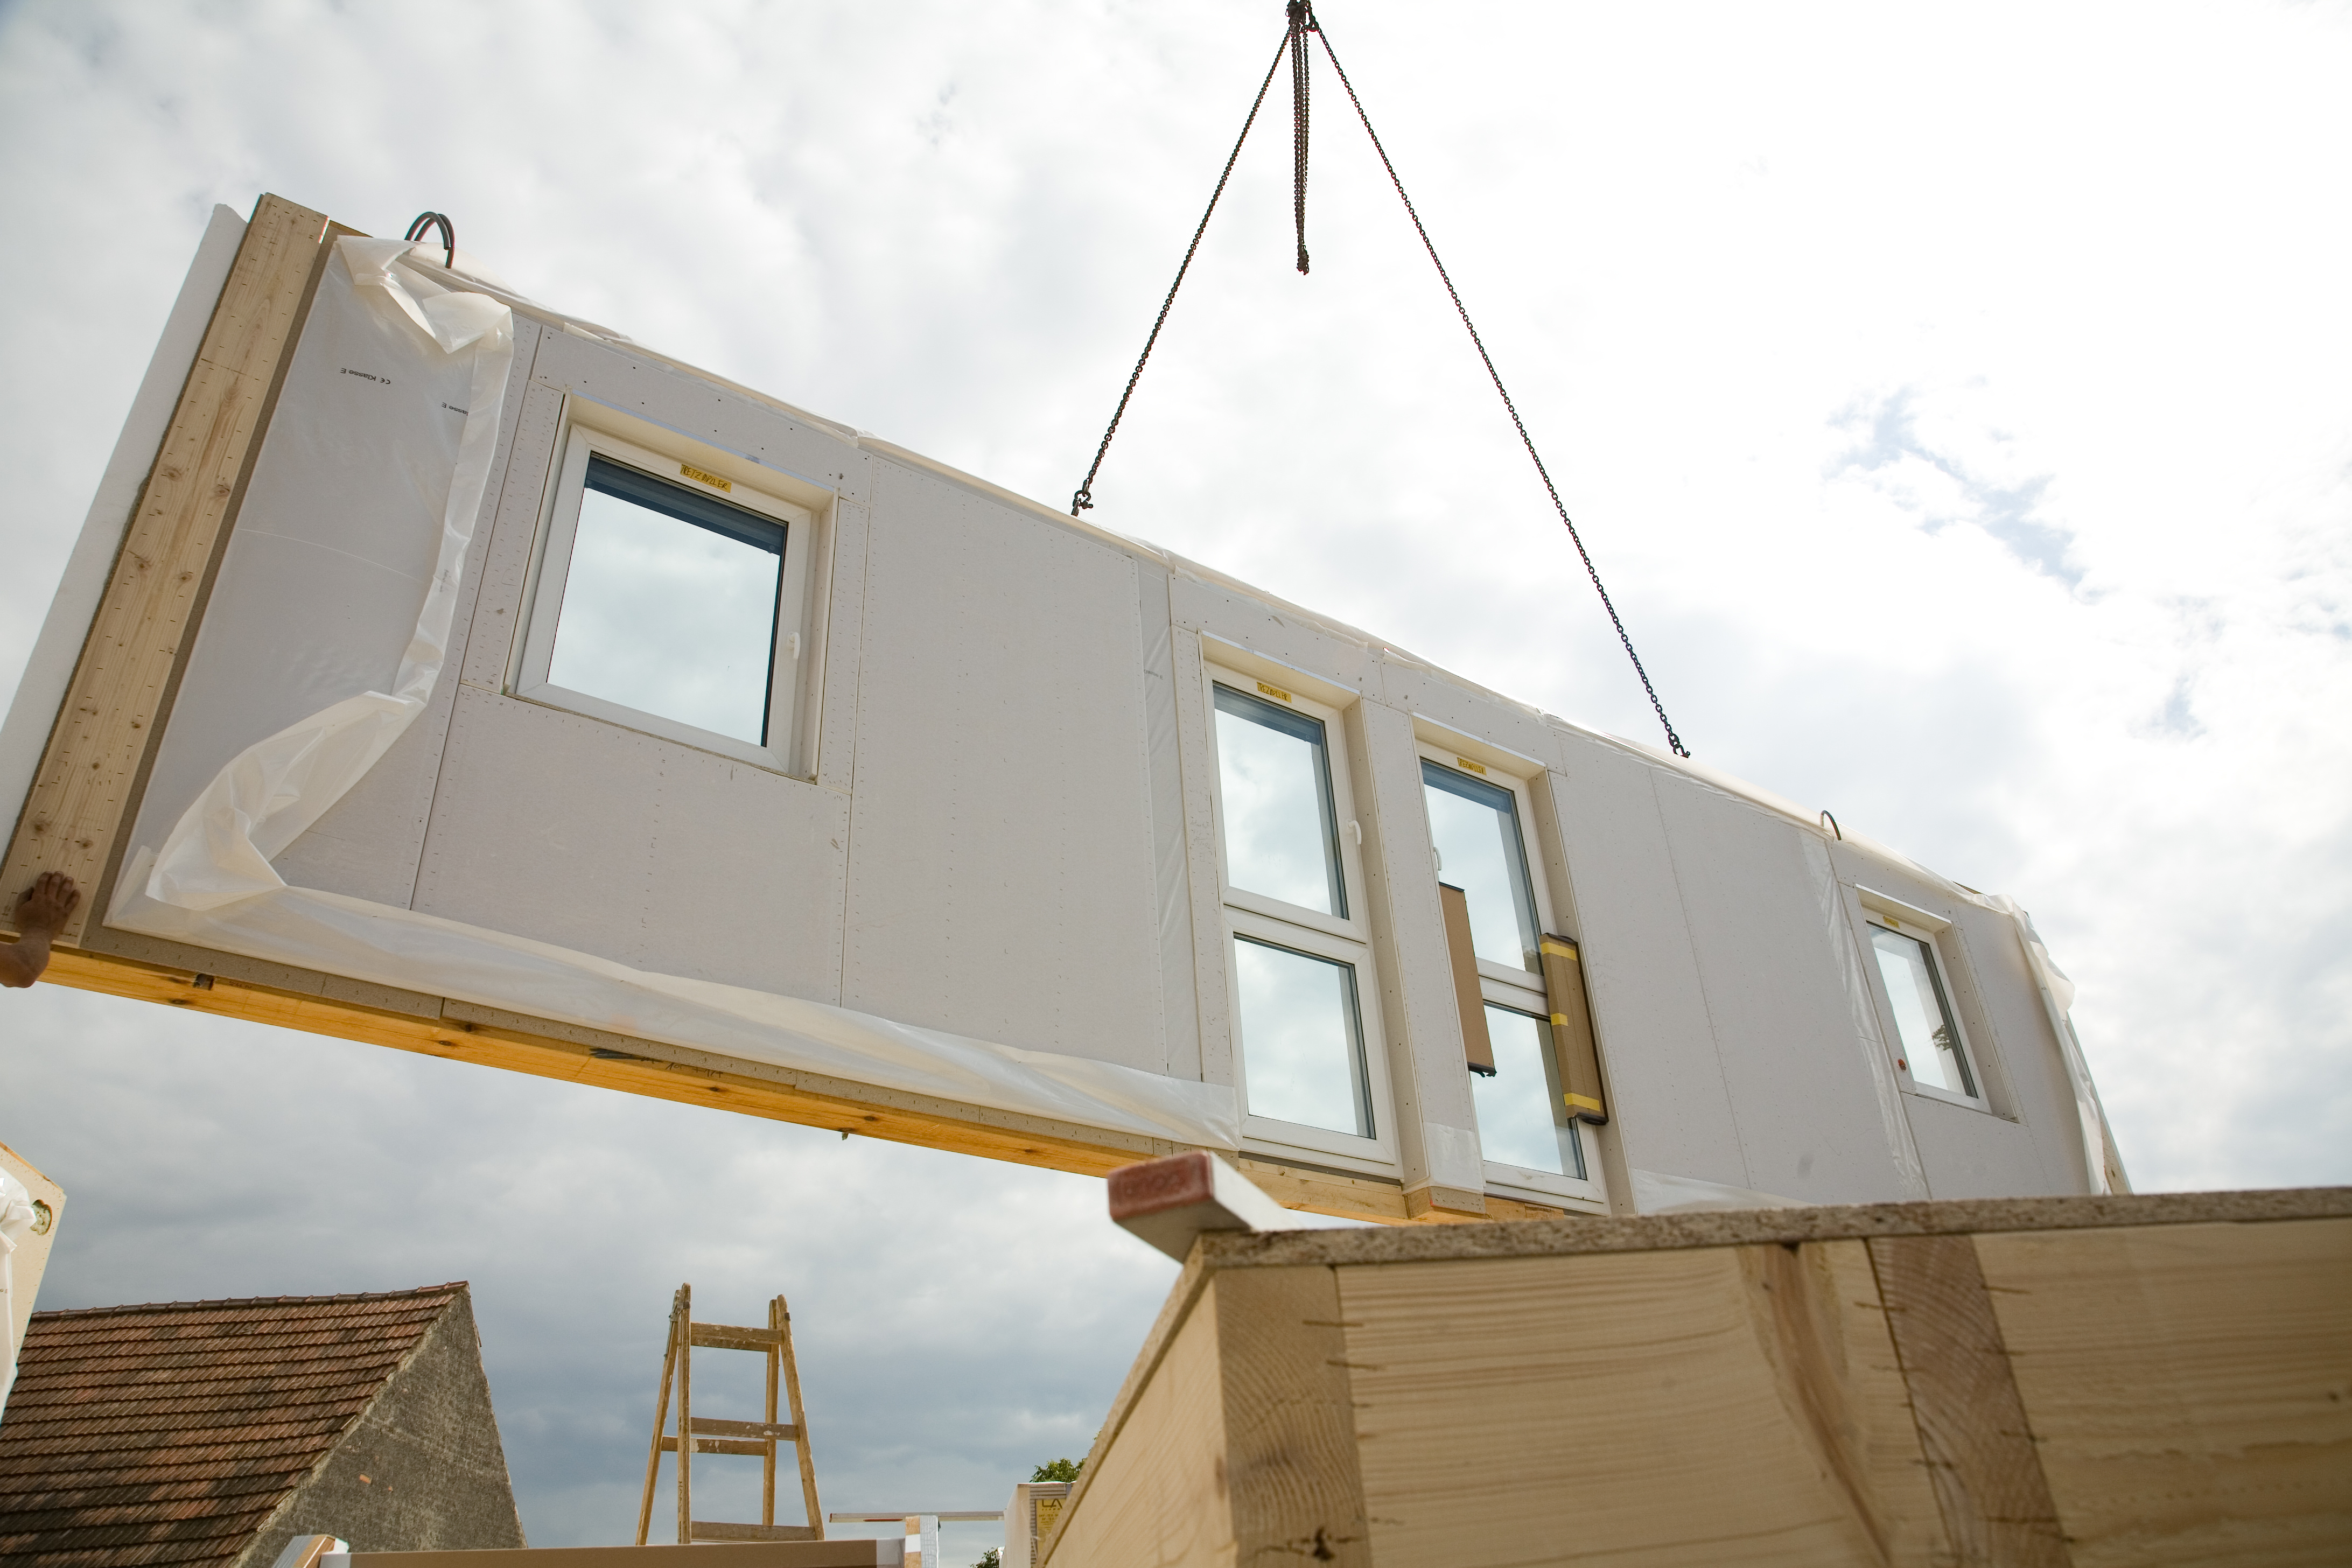 Lenders understanding modular construction could help solve housing shortage